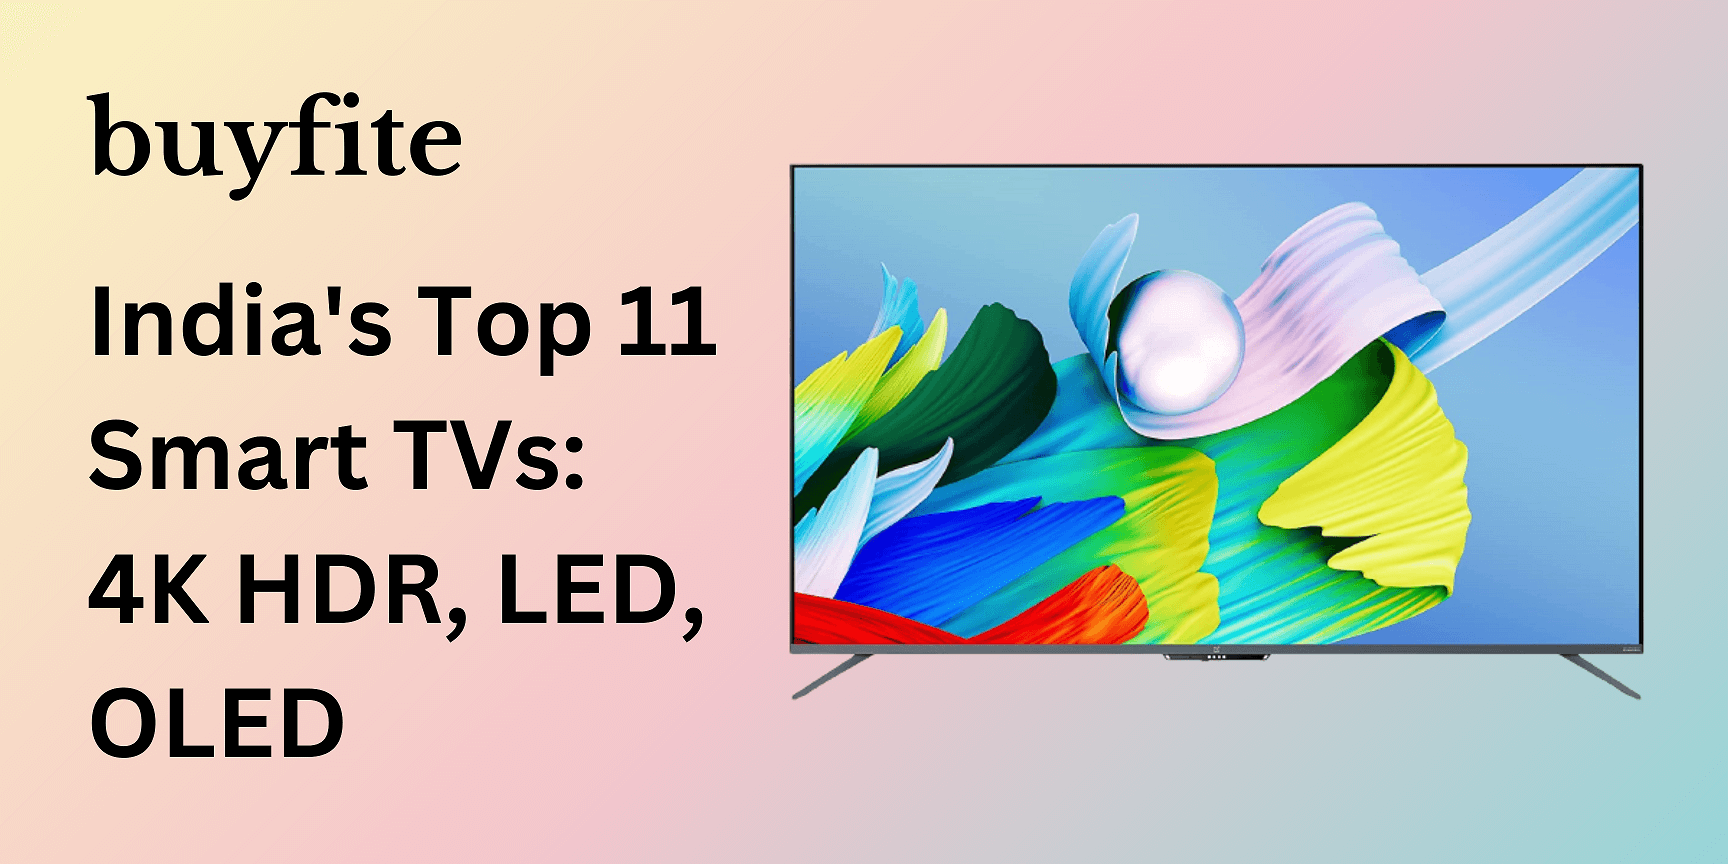 India's Top 11 Smart TVs 4K HDR, LED, OLED - buyfite